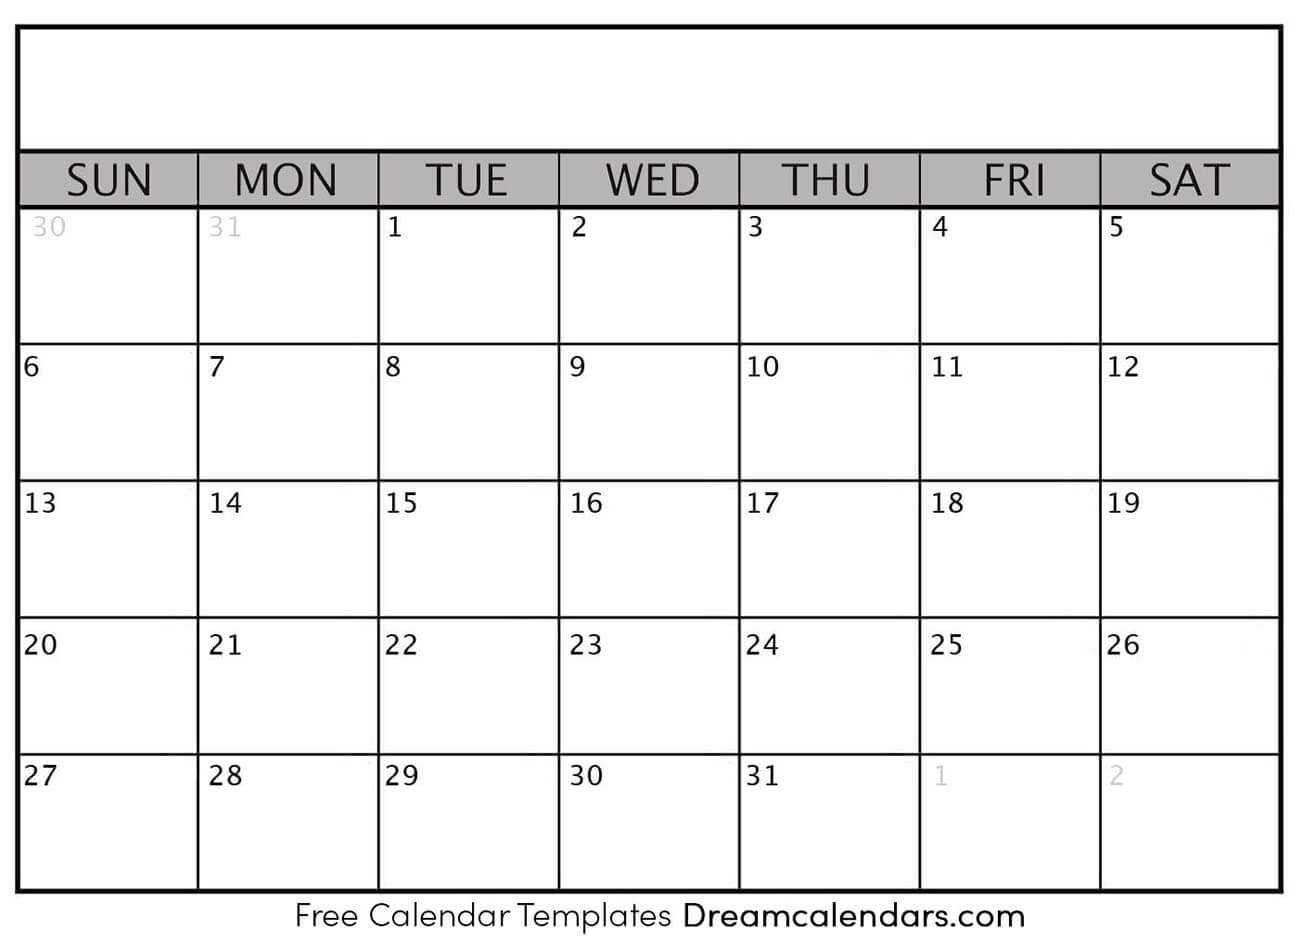 Printable Blank Calendar 2020 | Dream Calendars Intended For Blank Calender Template